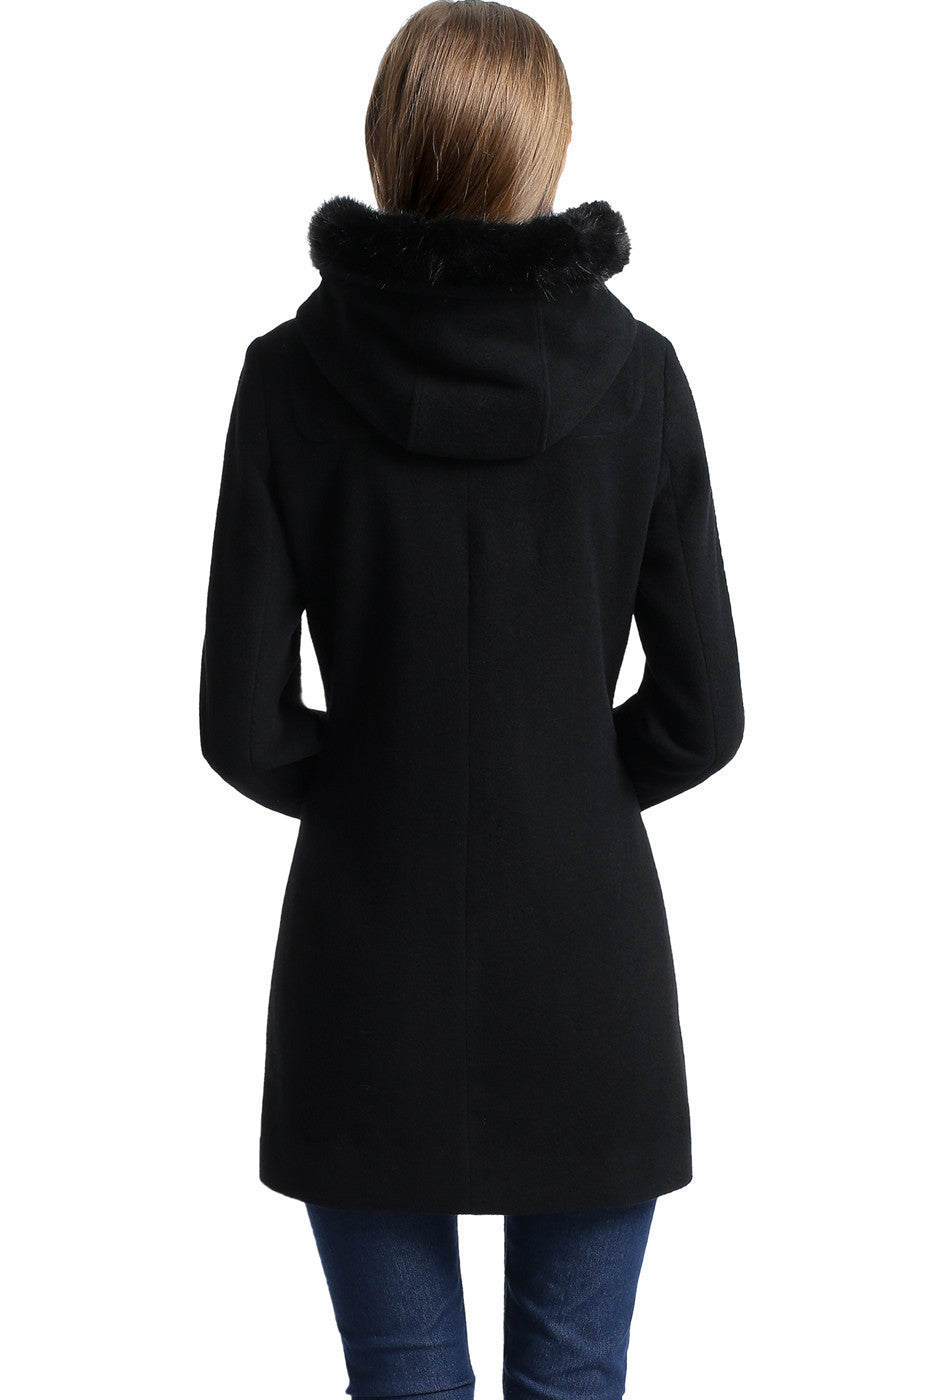 BGSD Women Lana Wool Hooded Parka Coat